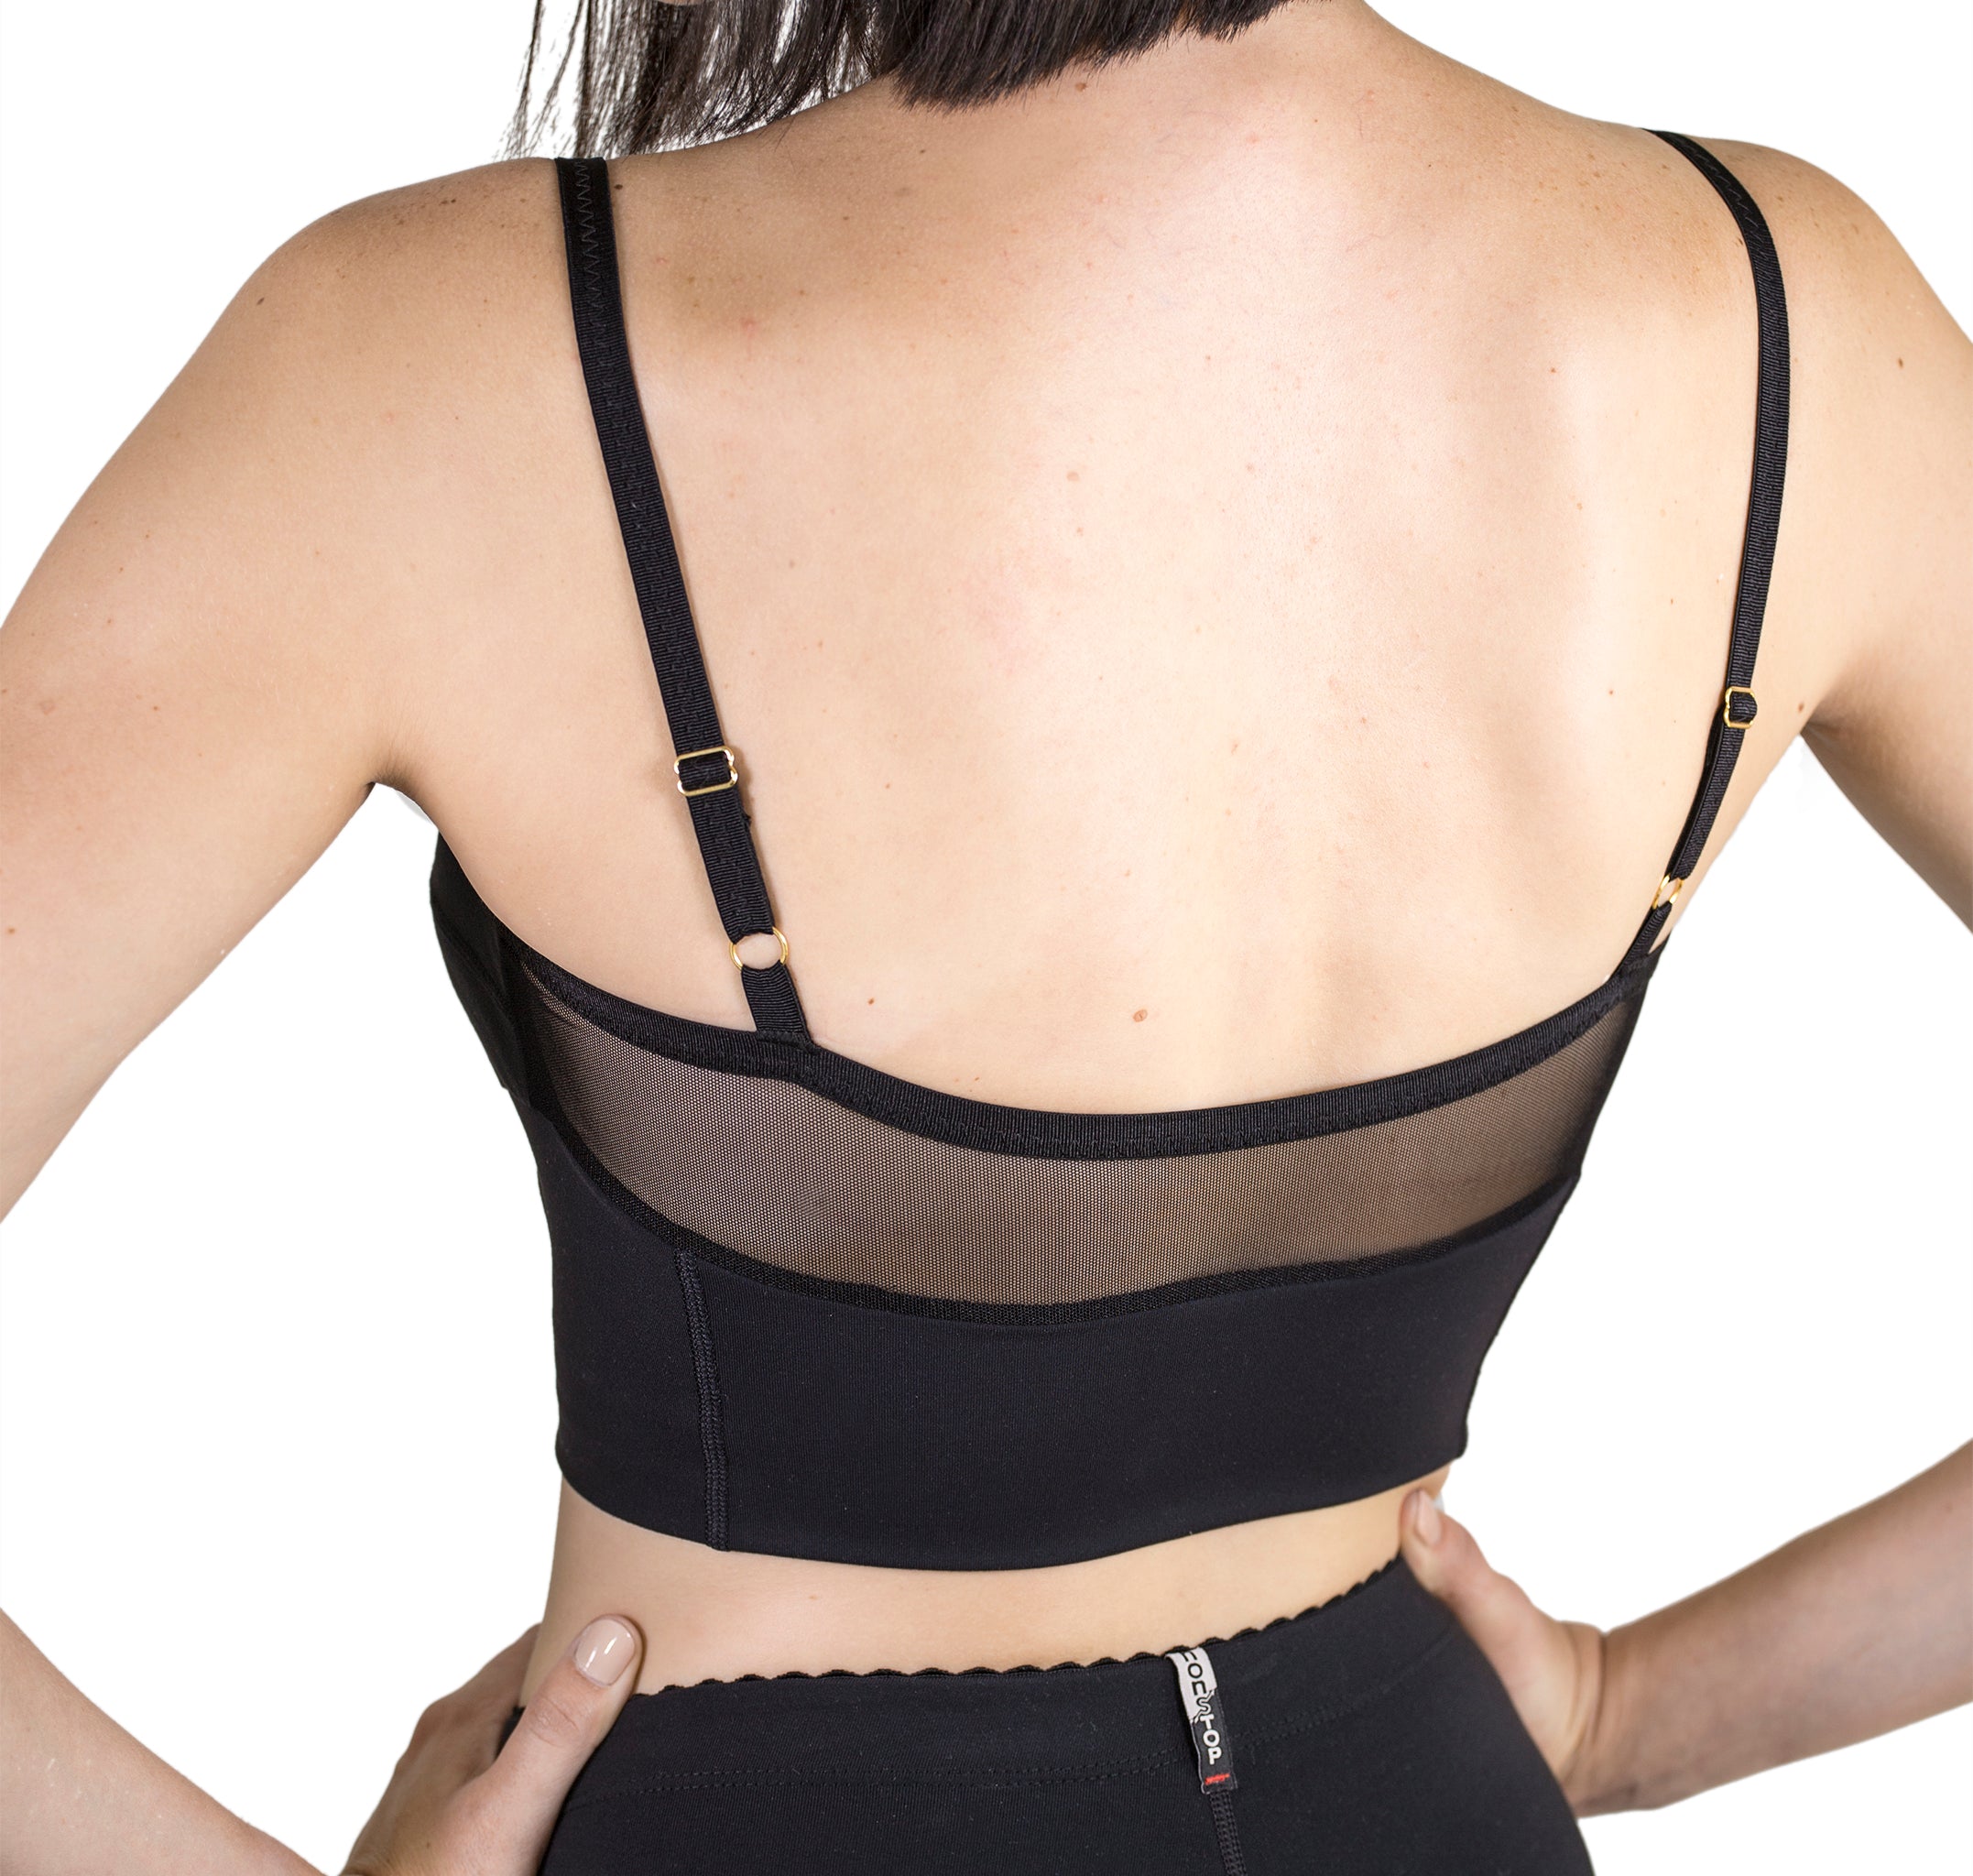 Premium quality black Bralette back view shows mesh panel upper and adjustable straps.